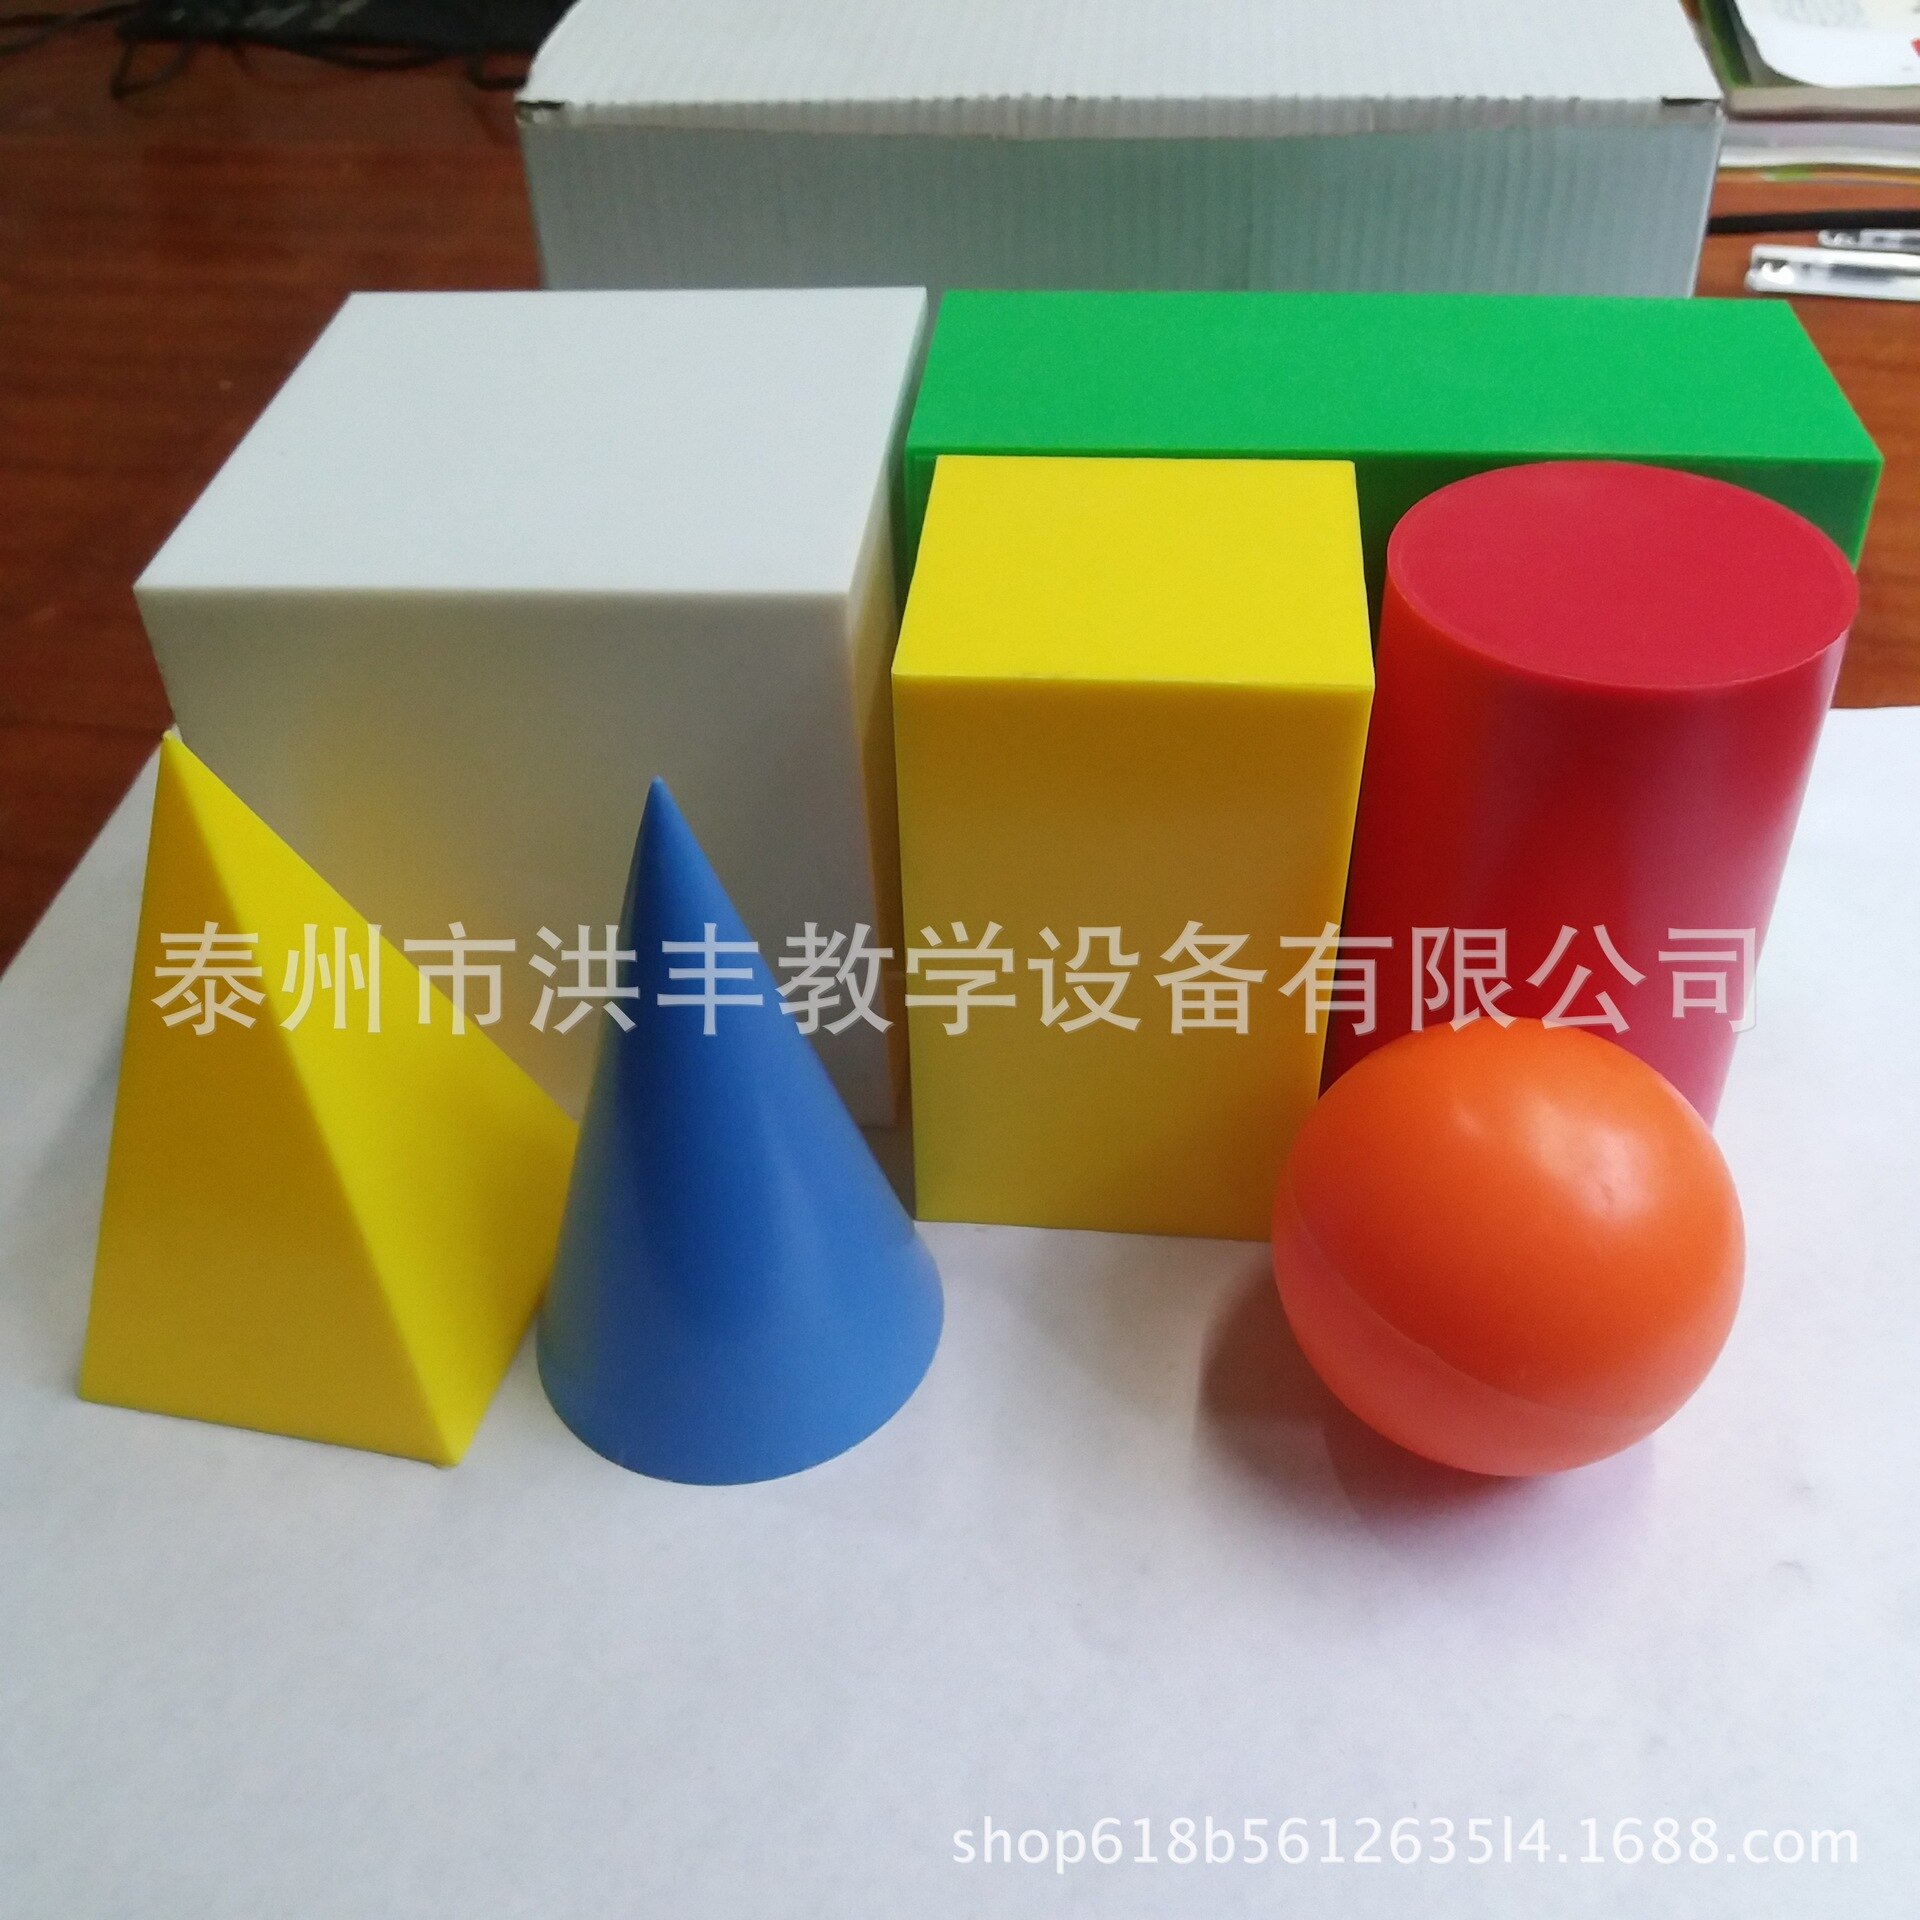 Big Size Geometrische Vorm Model Cilinder Kegel Quadripyramid Cube Cuboid Bal Wiskunde Leermiddelen